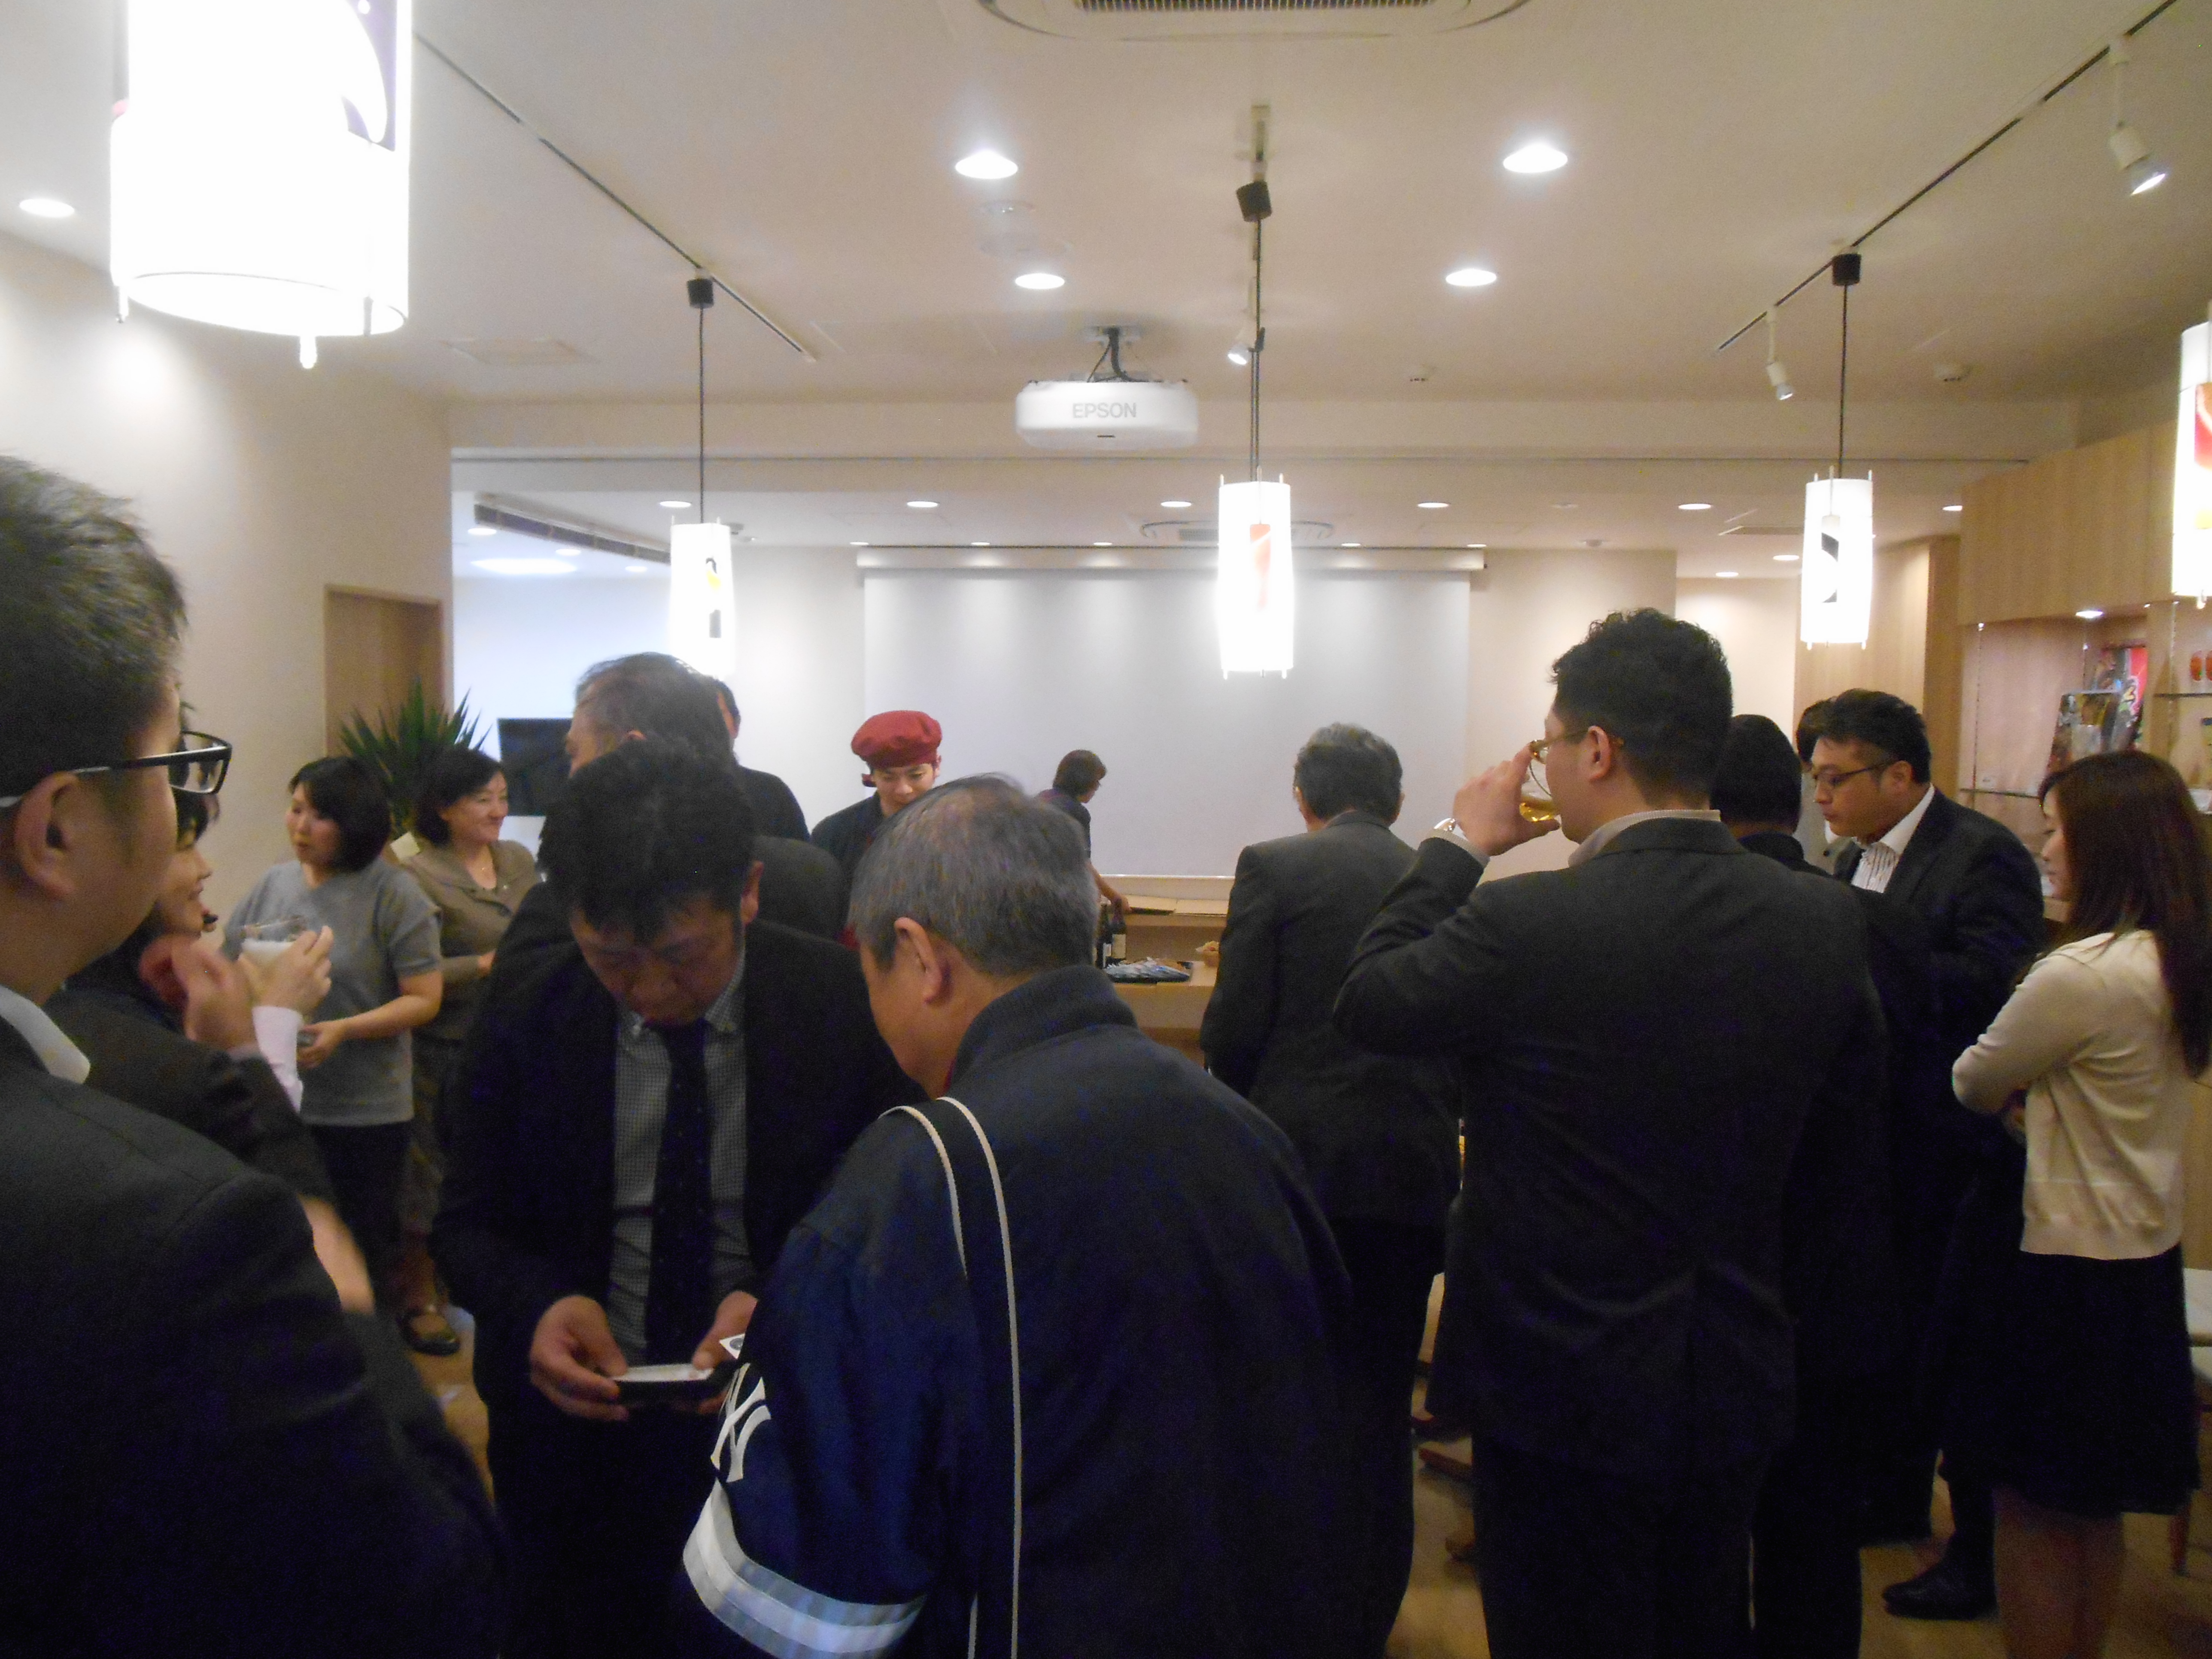 DSCN1595 1 - AoMoLink〜赤坂〜の第2回勉強会&交流会開催します。